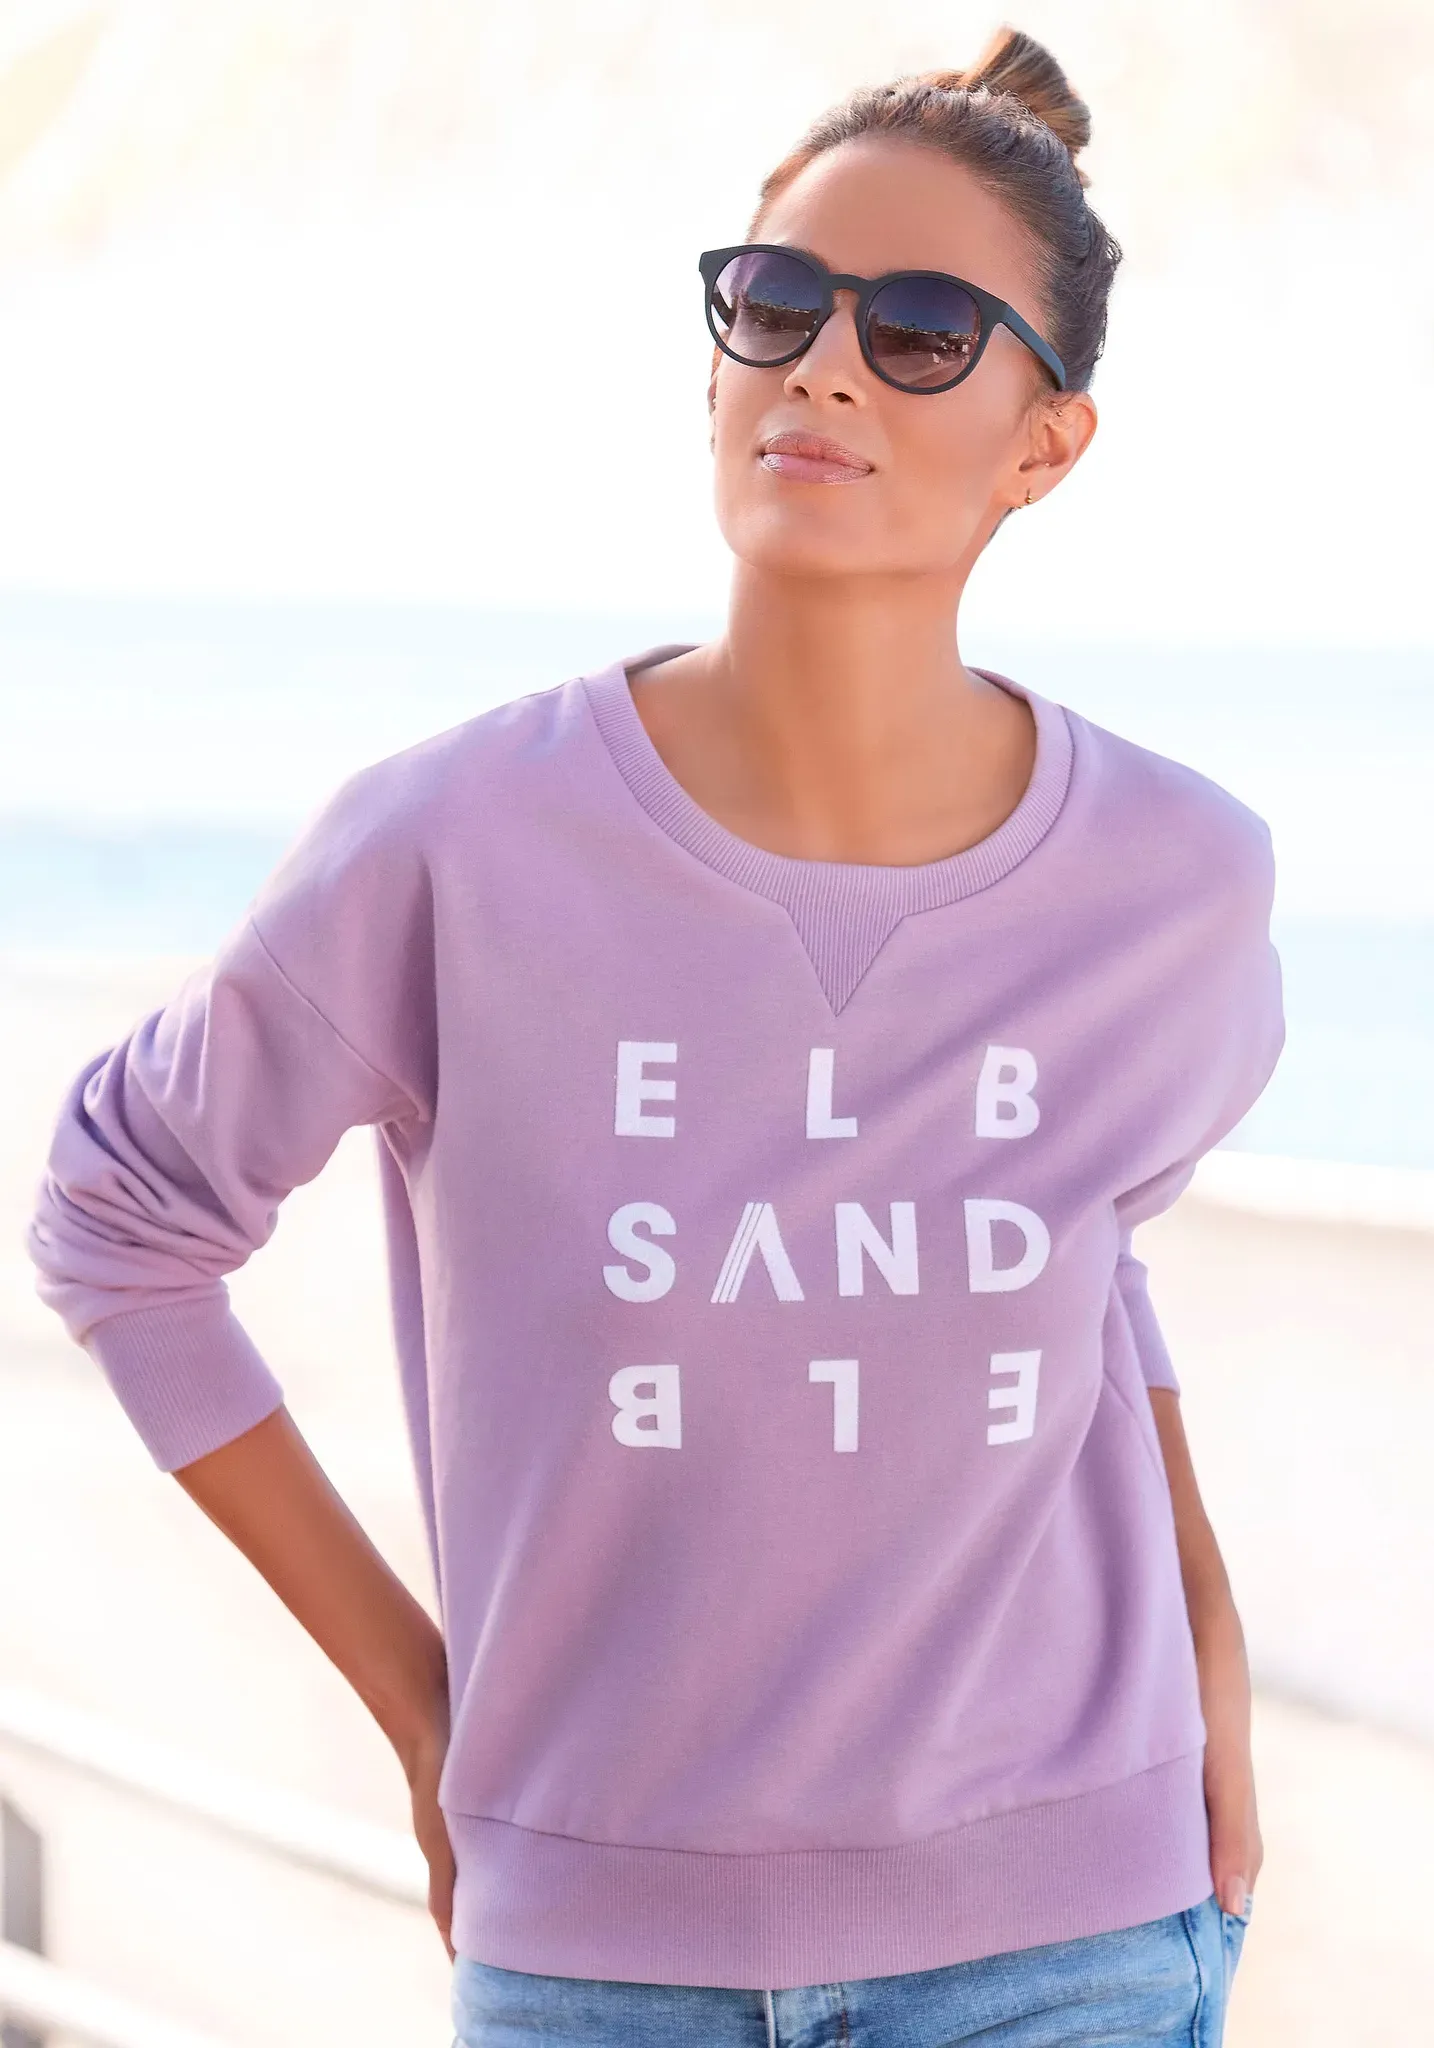 Sweatshirt ELBSAND "Ylva" Gr. S (36), lila Damen Sweatshirts mit Logodruck, sportlich-casual